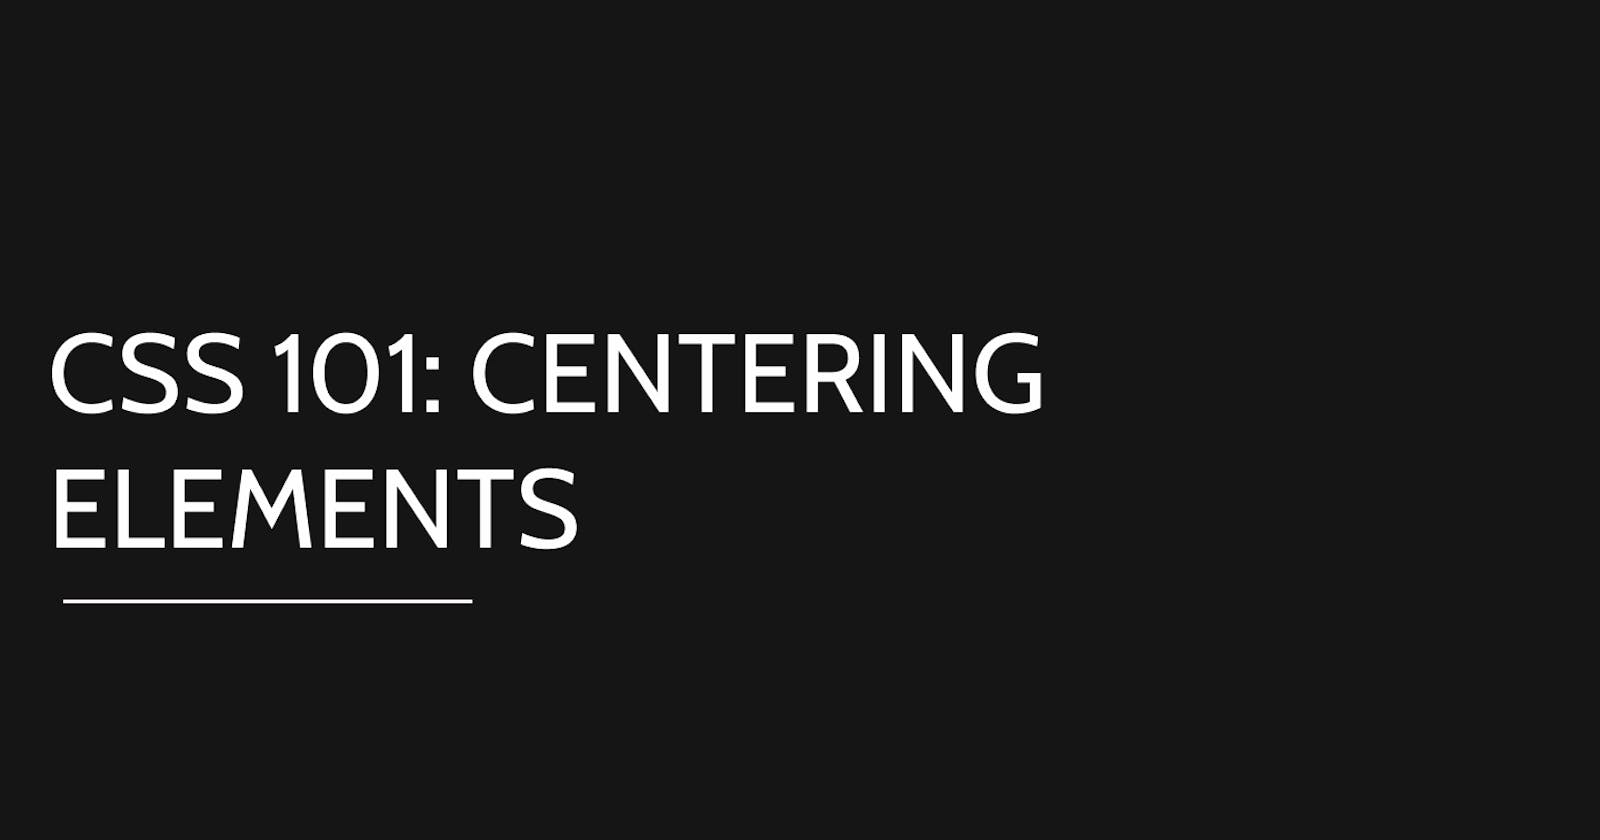 CSS 101: Centering elements